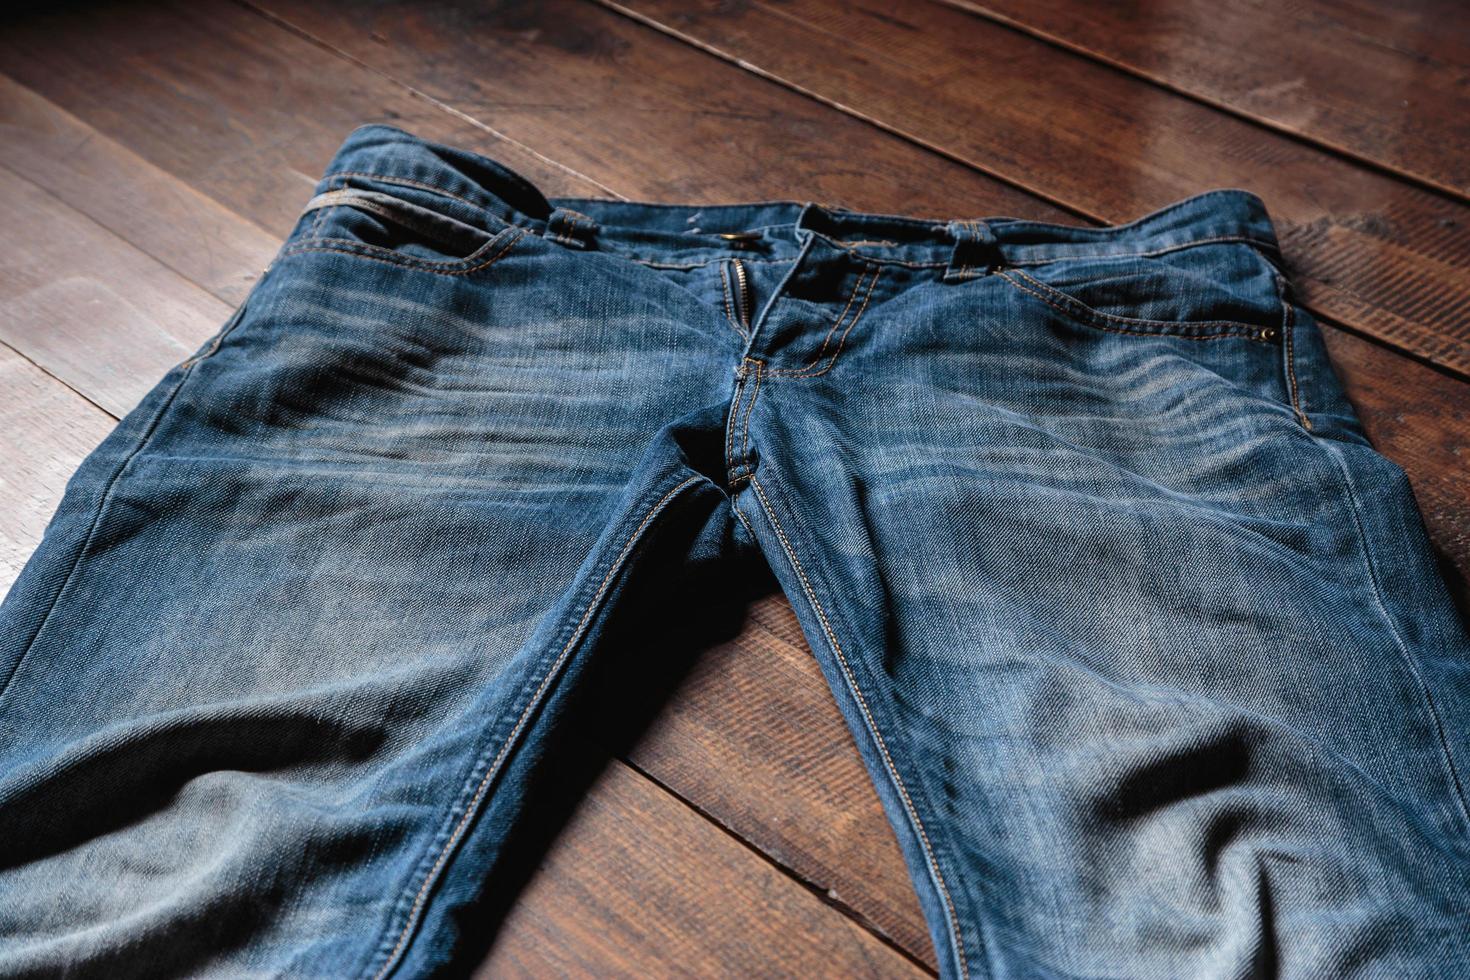 Blue mens jeans denim pants on wooden background. Fashion clothing concept. photo